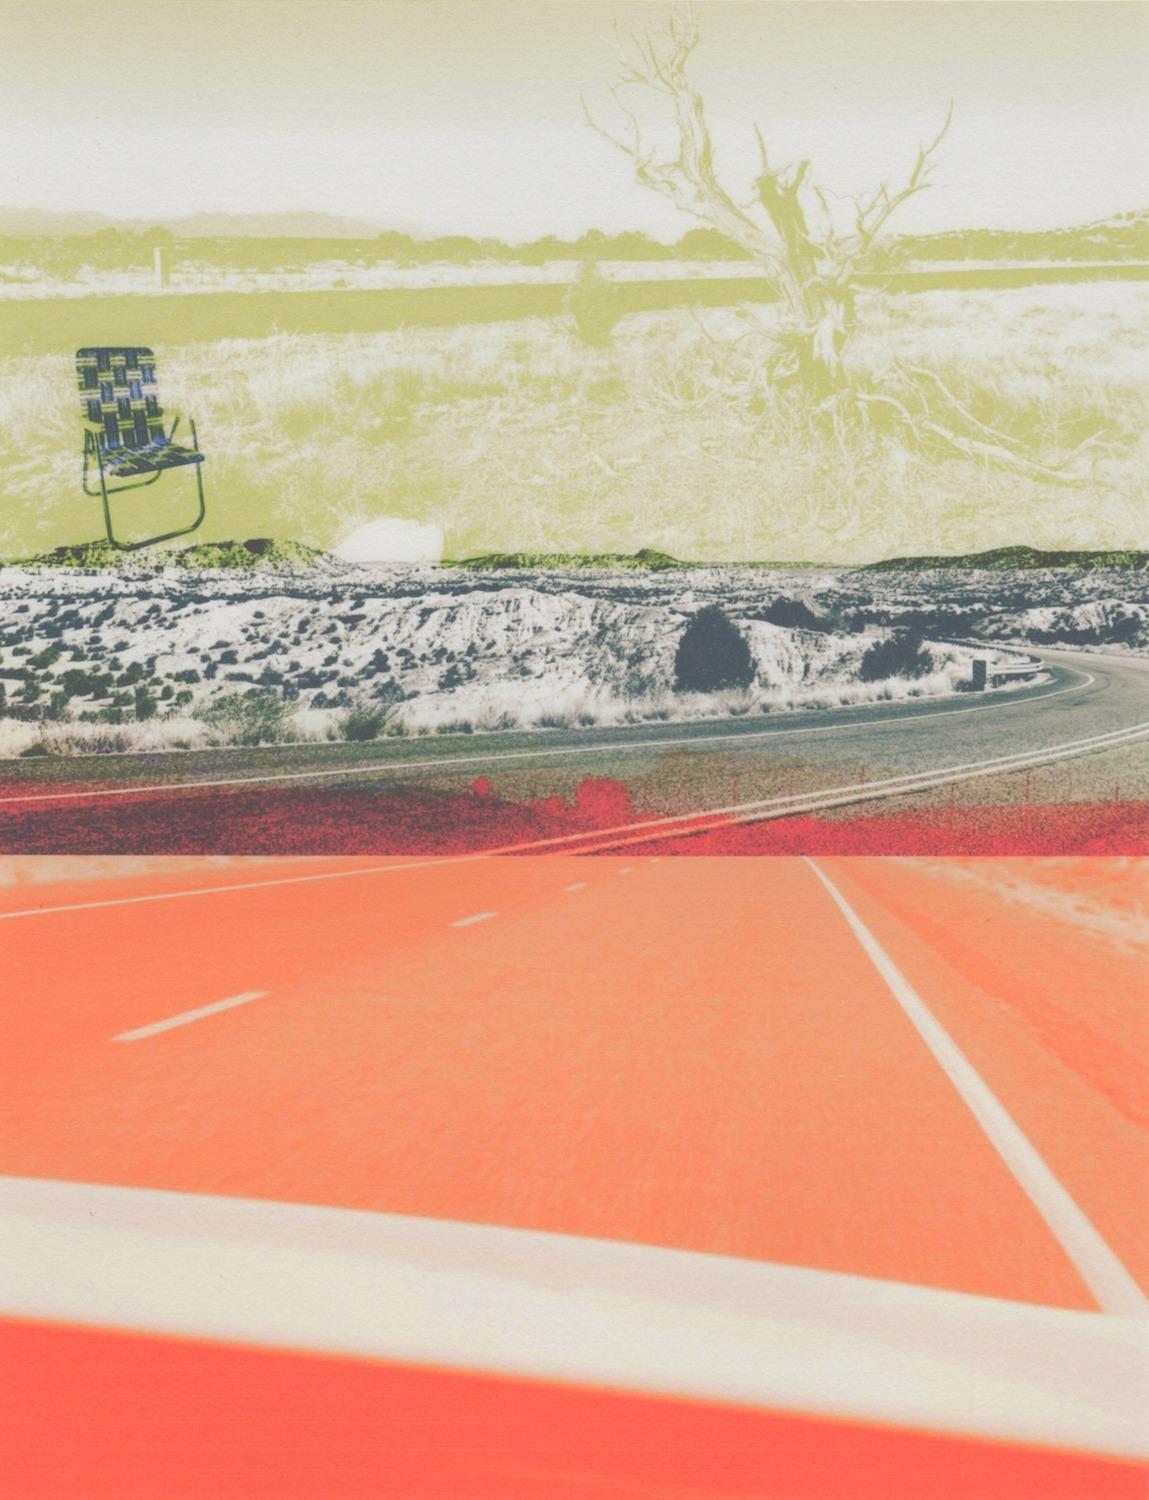 « Red Road Black Chair », photographie, paysage, sud-ouest, vert, monogravure - Print de Patty deGrandpre